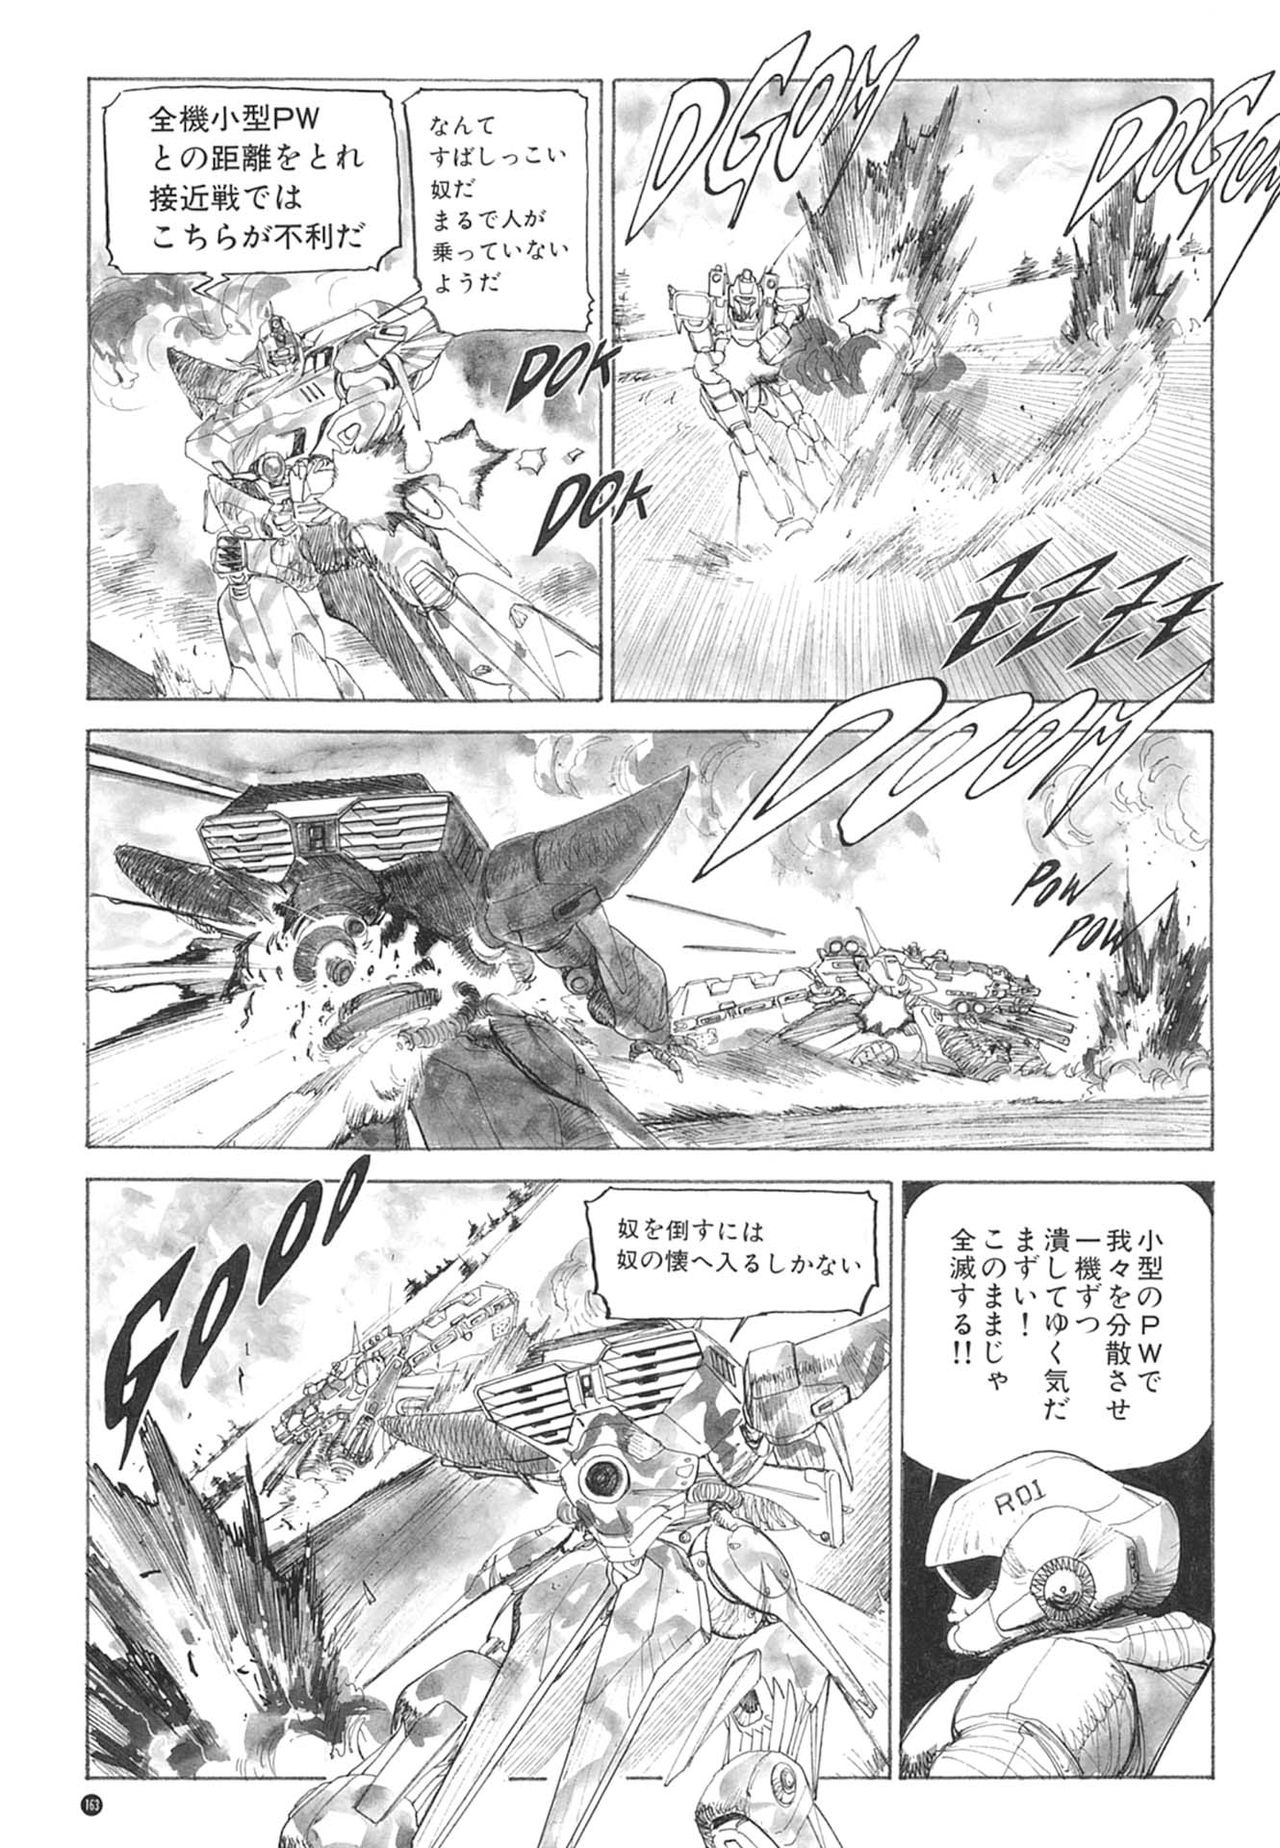 [Kazuhisa Kondo] Kazuhisa Kondo 2D & 3D Works - Go Ahead - From Mobile Suit Gundam to Original Mechanism 162